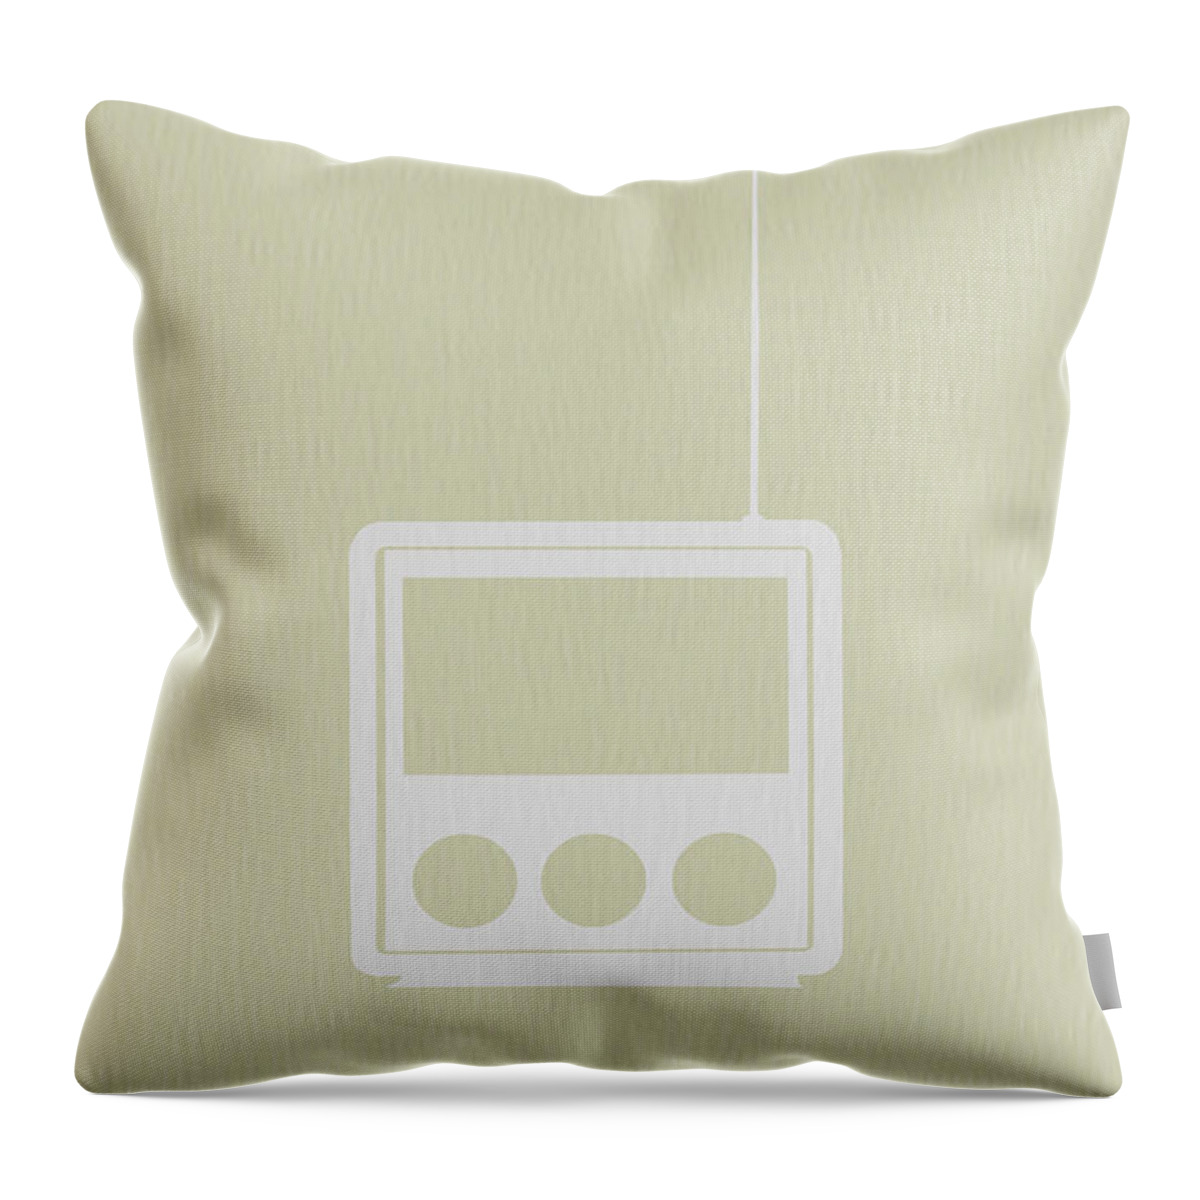 Radio Throw Pillow featuring the digital art Little Radio by Naxart Studio